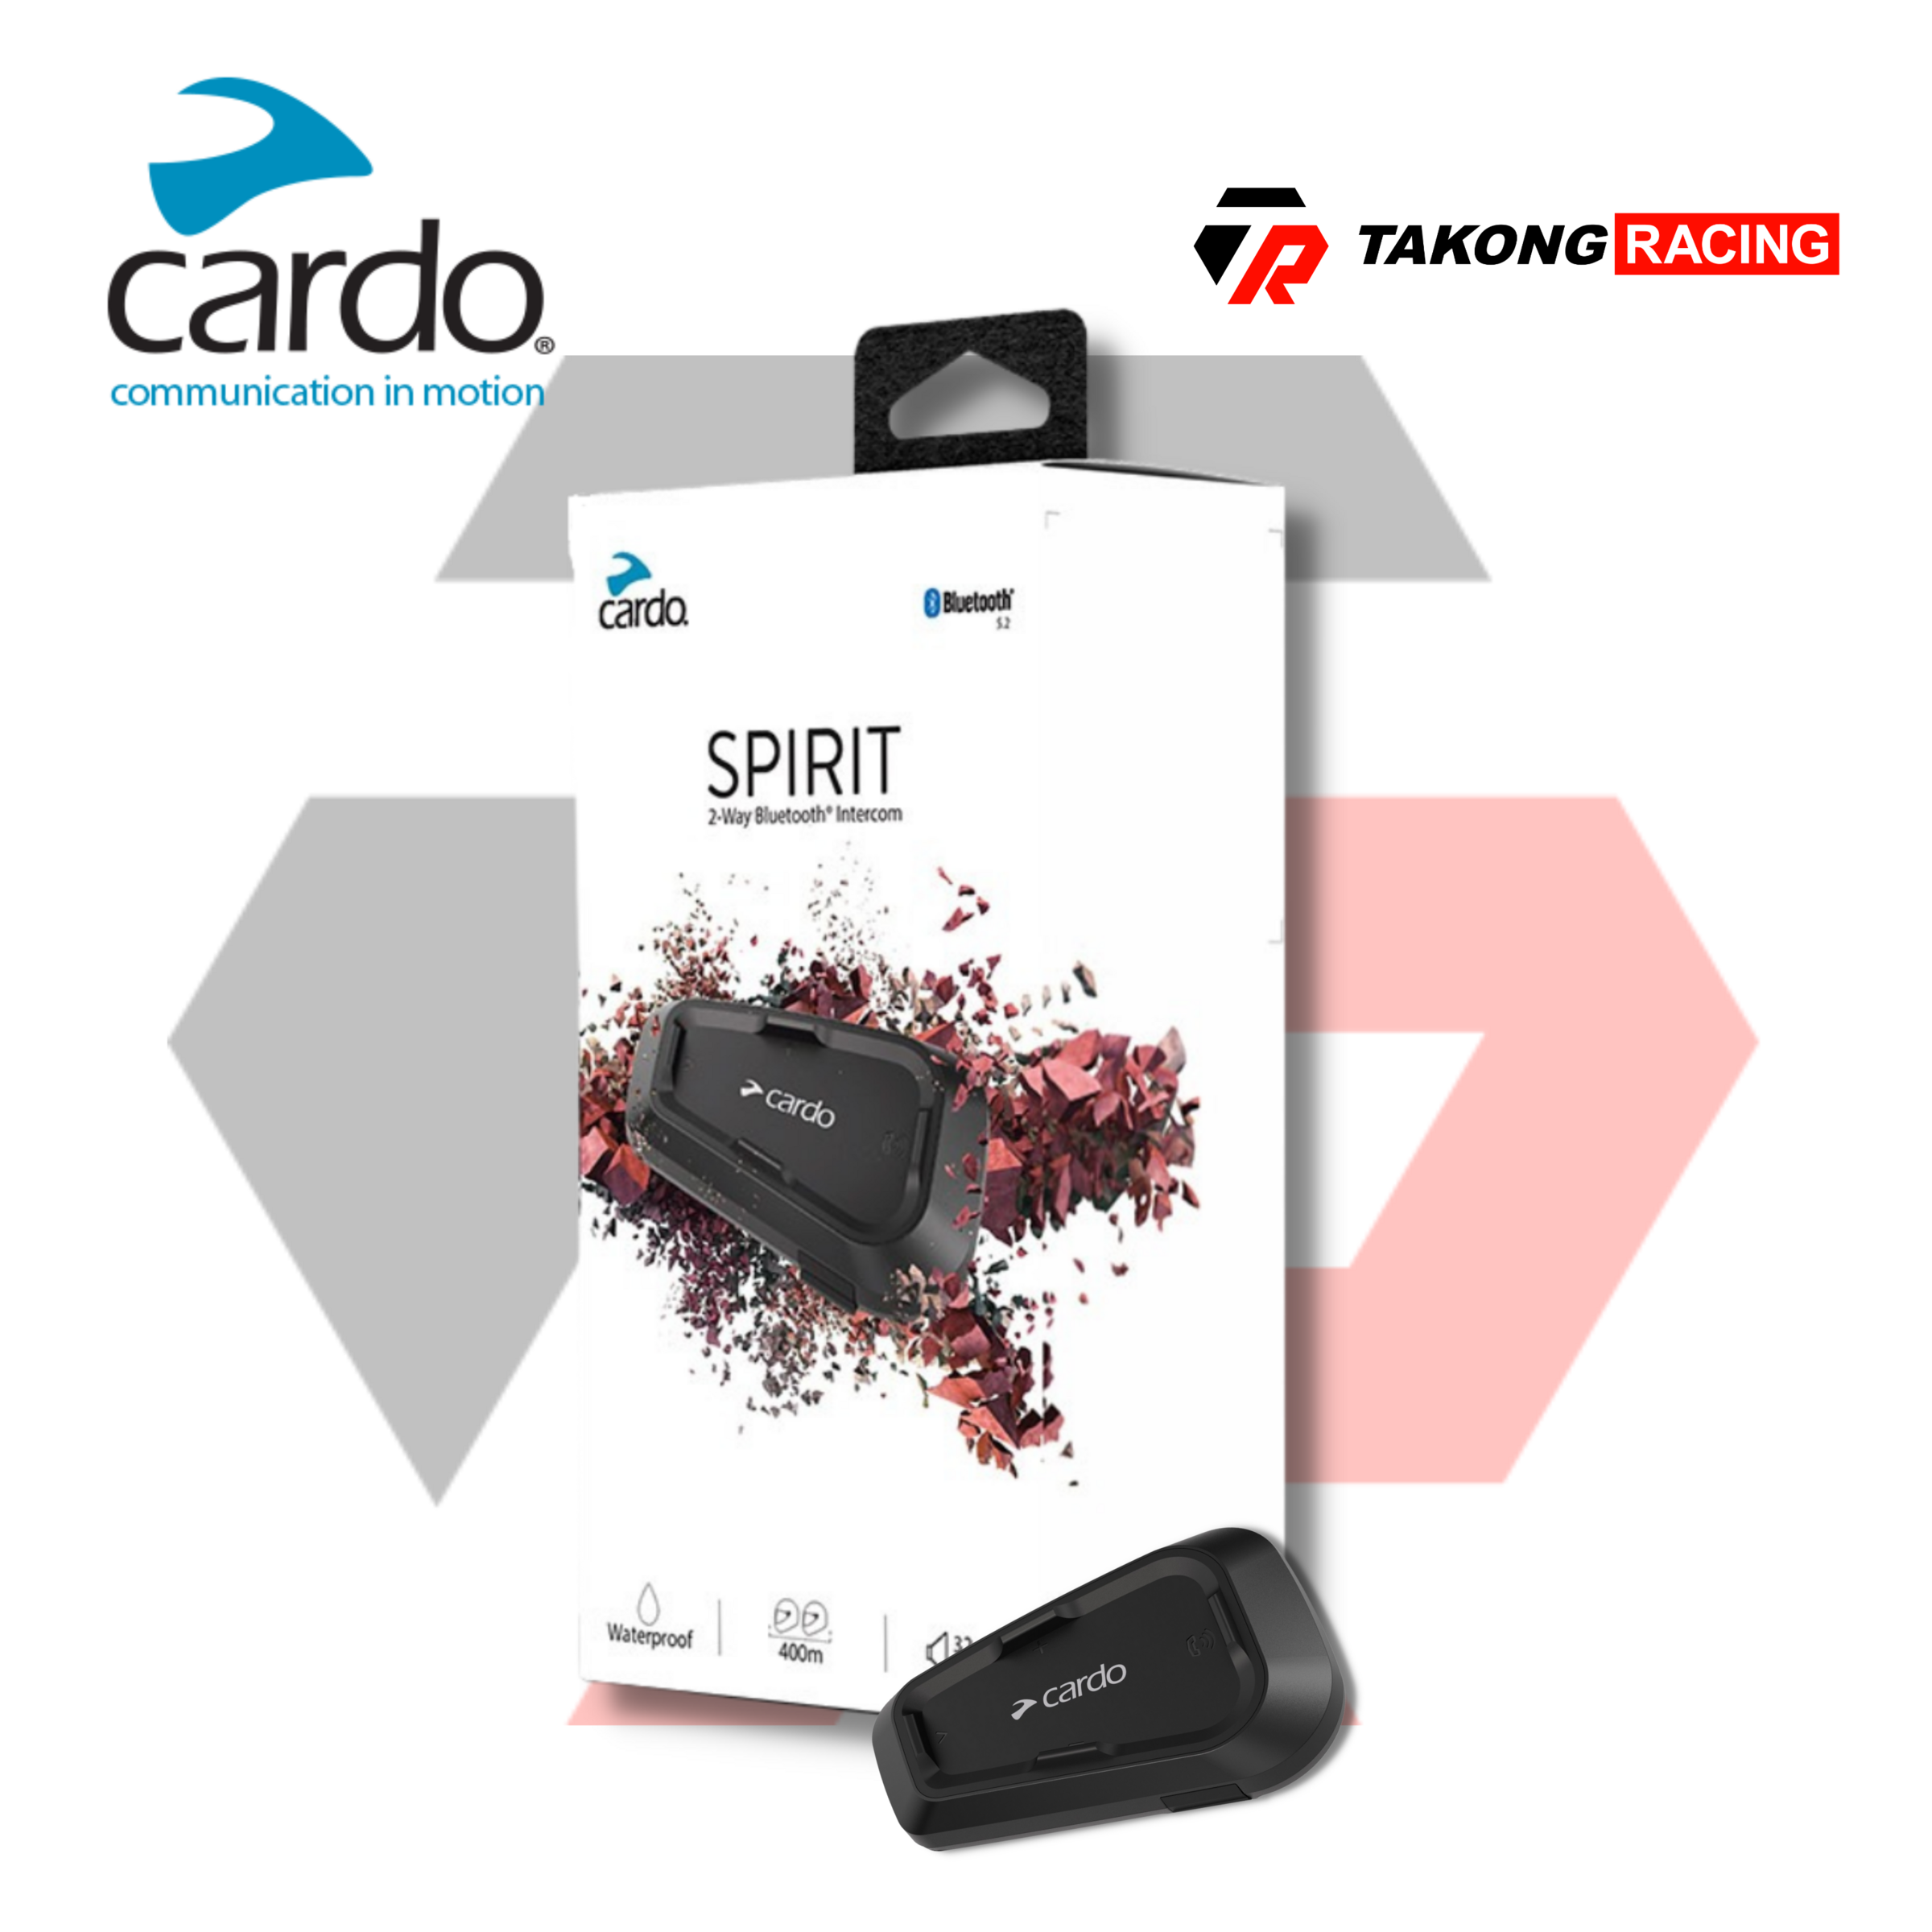 Cardo Spirit HD and Freecom X2 - First Look